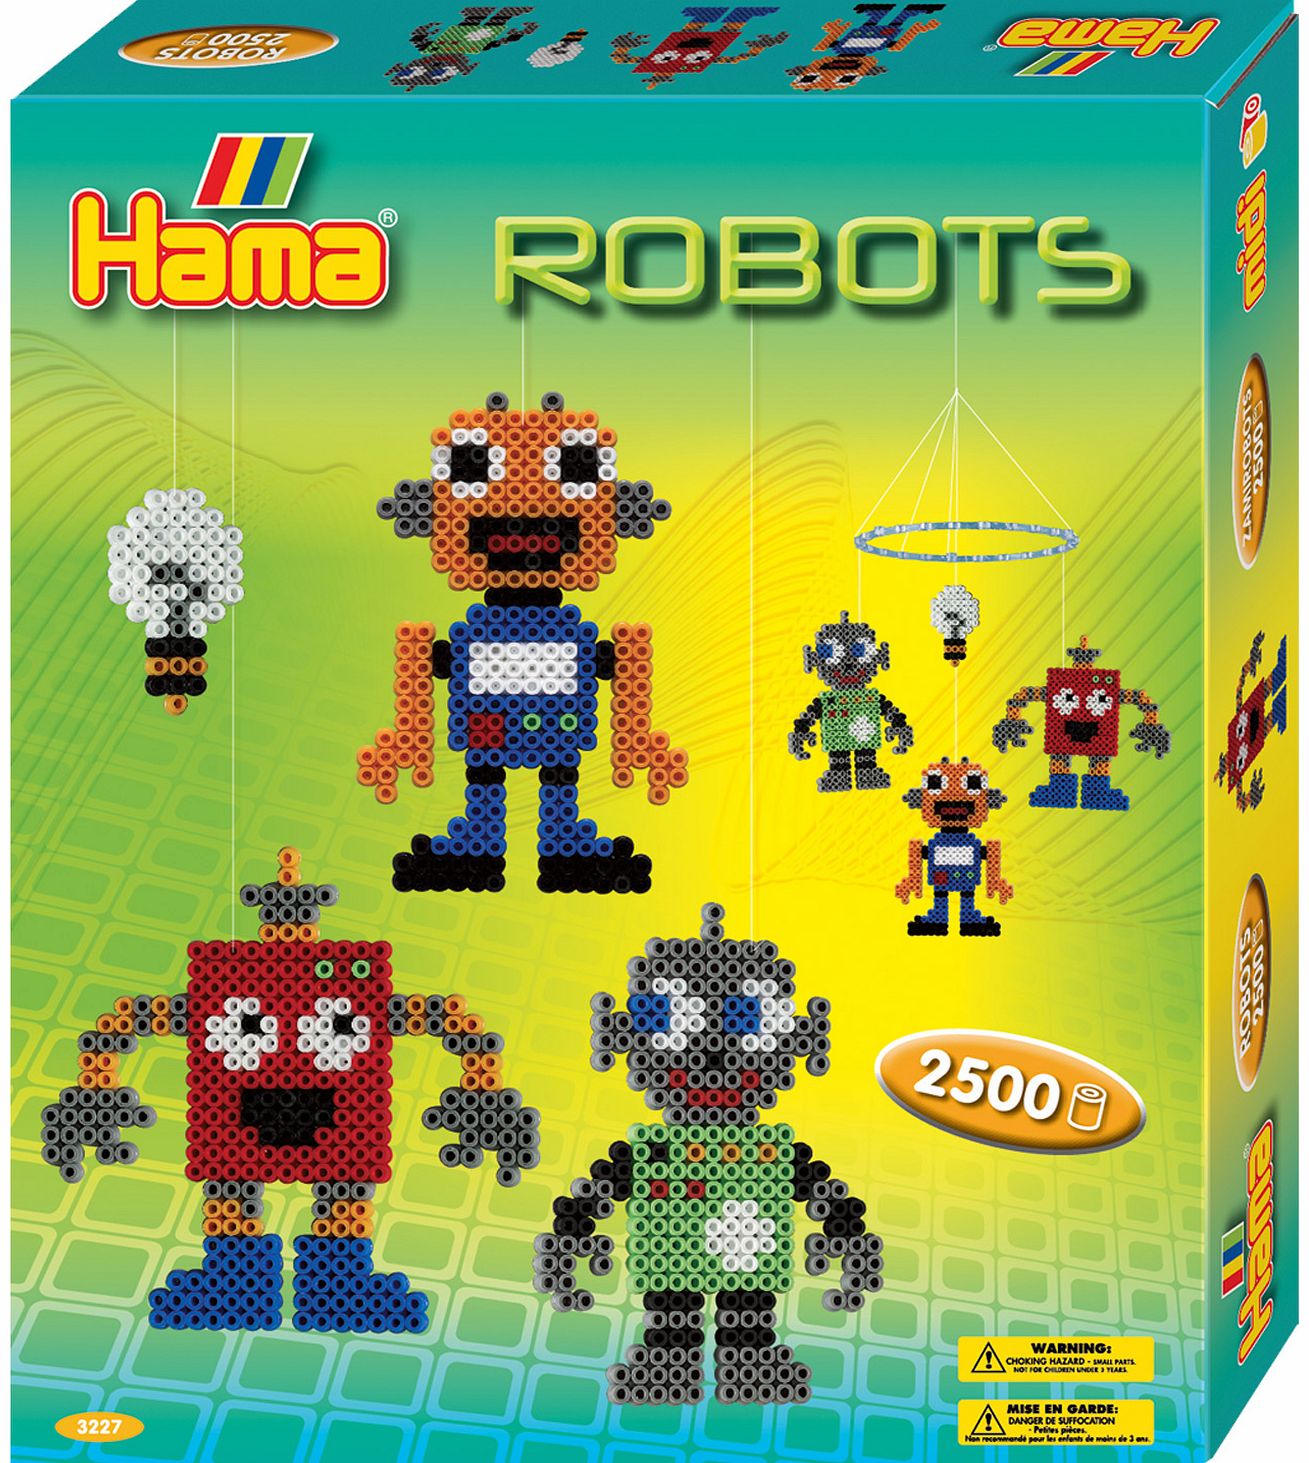 Hama Robots